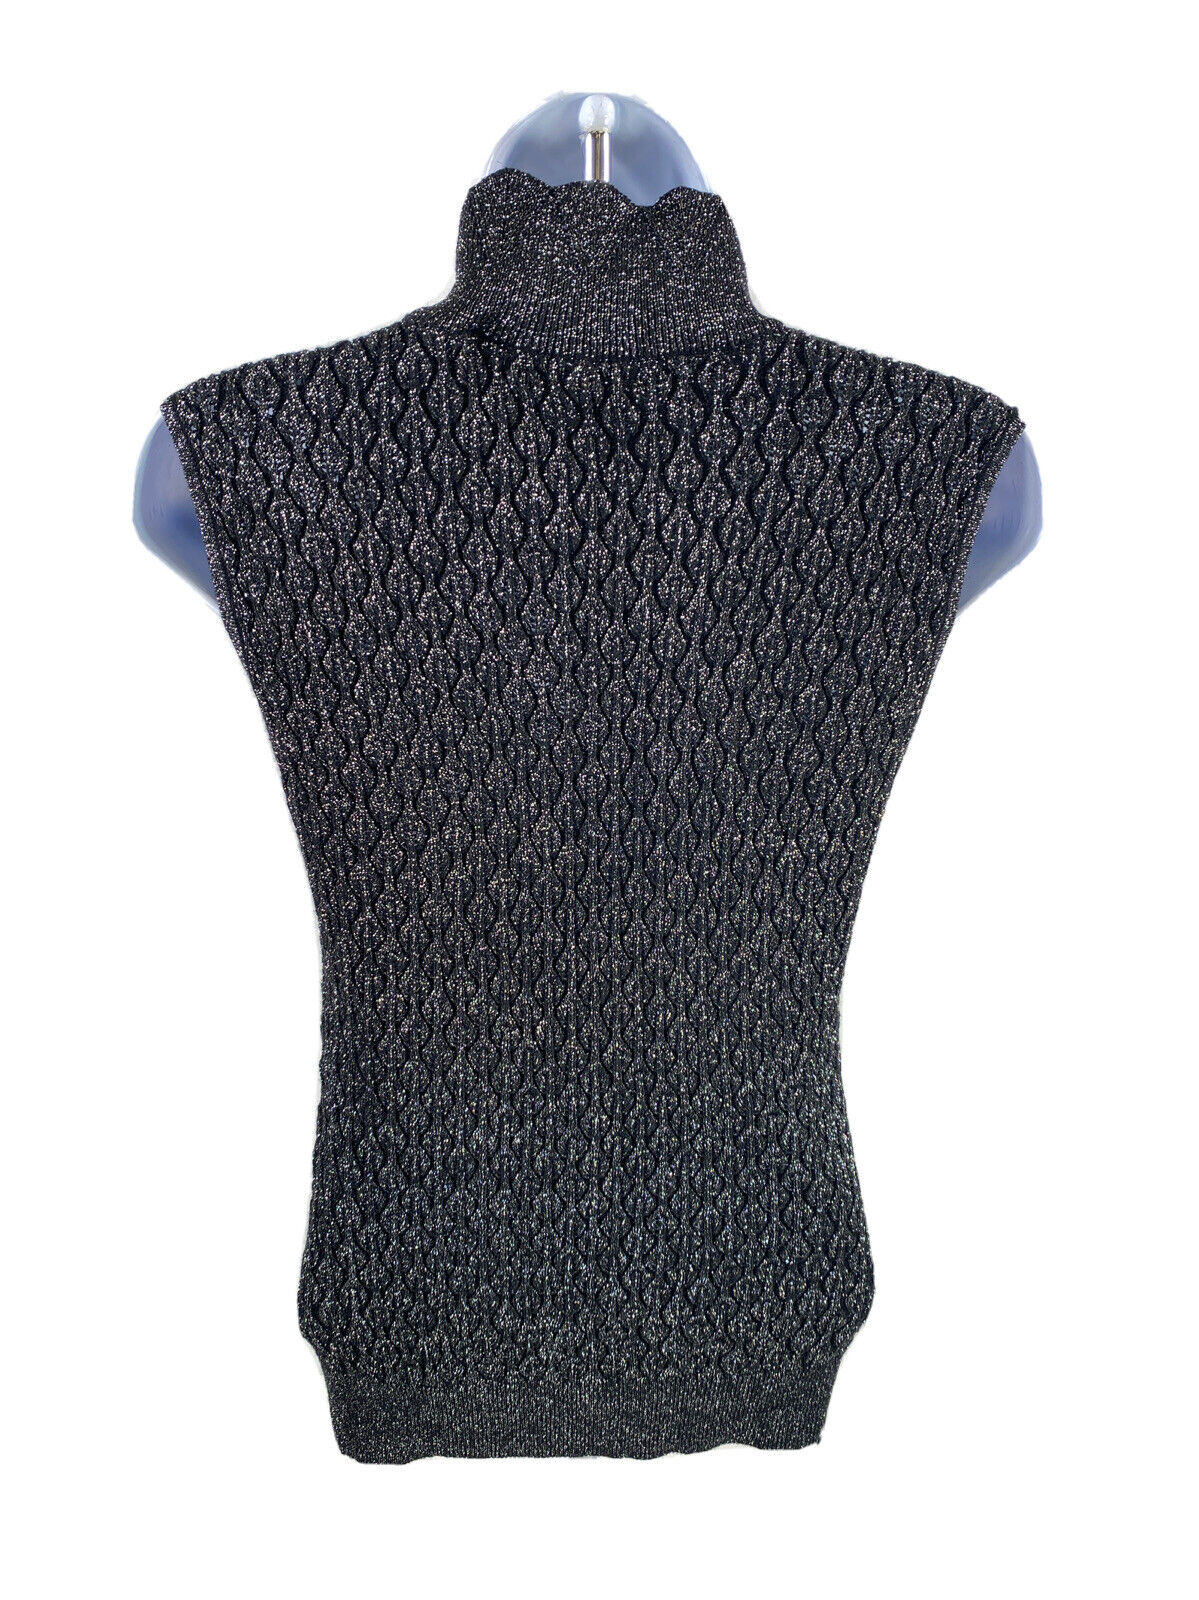 NEW Tahari Women's Black Metallic Sleeveless Turtleneck Sweater - XS